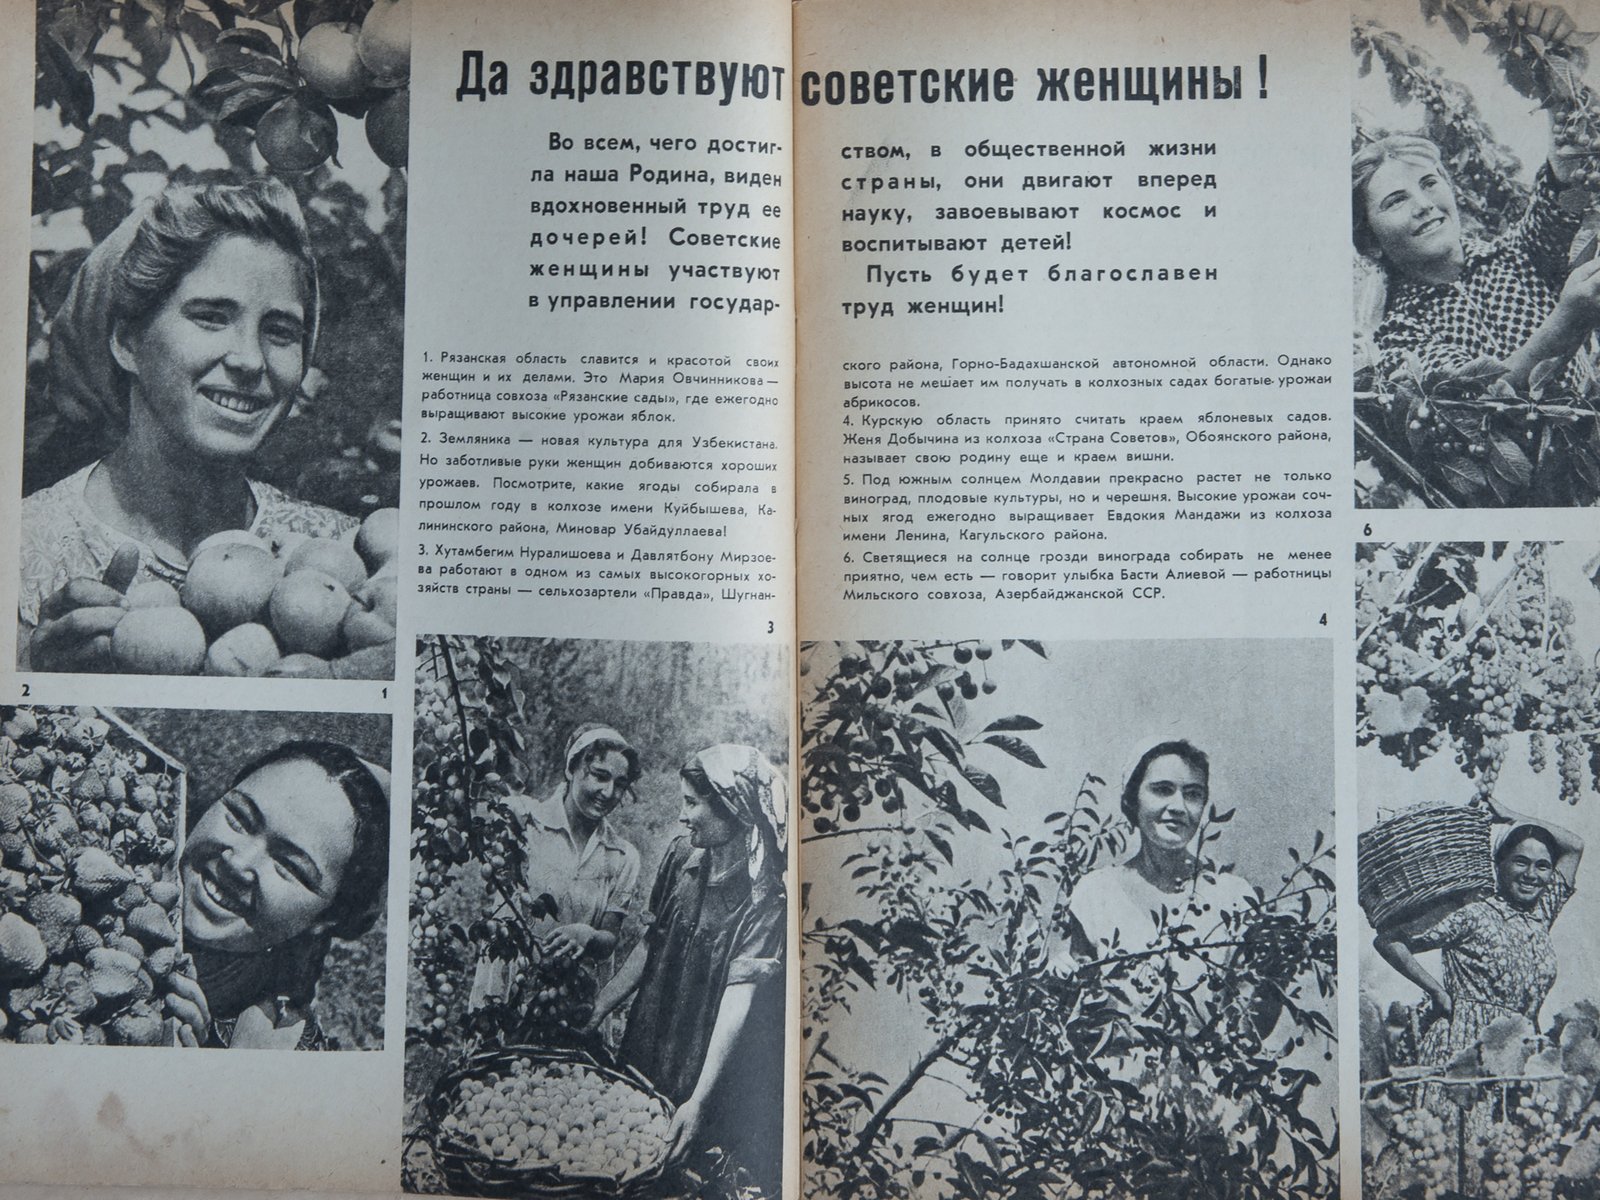 Centerfold of&nbsp;the magazine Sadovodstvo&nbsp;(Gardening), March 1966  KADIST